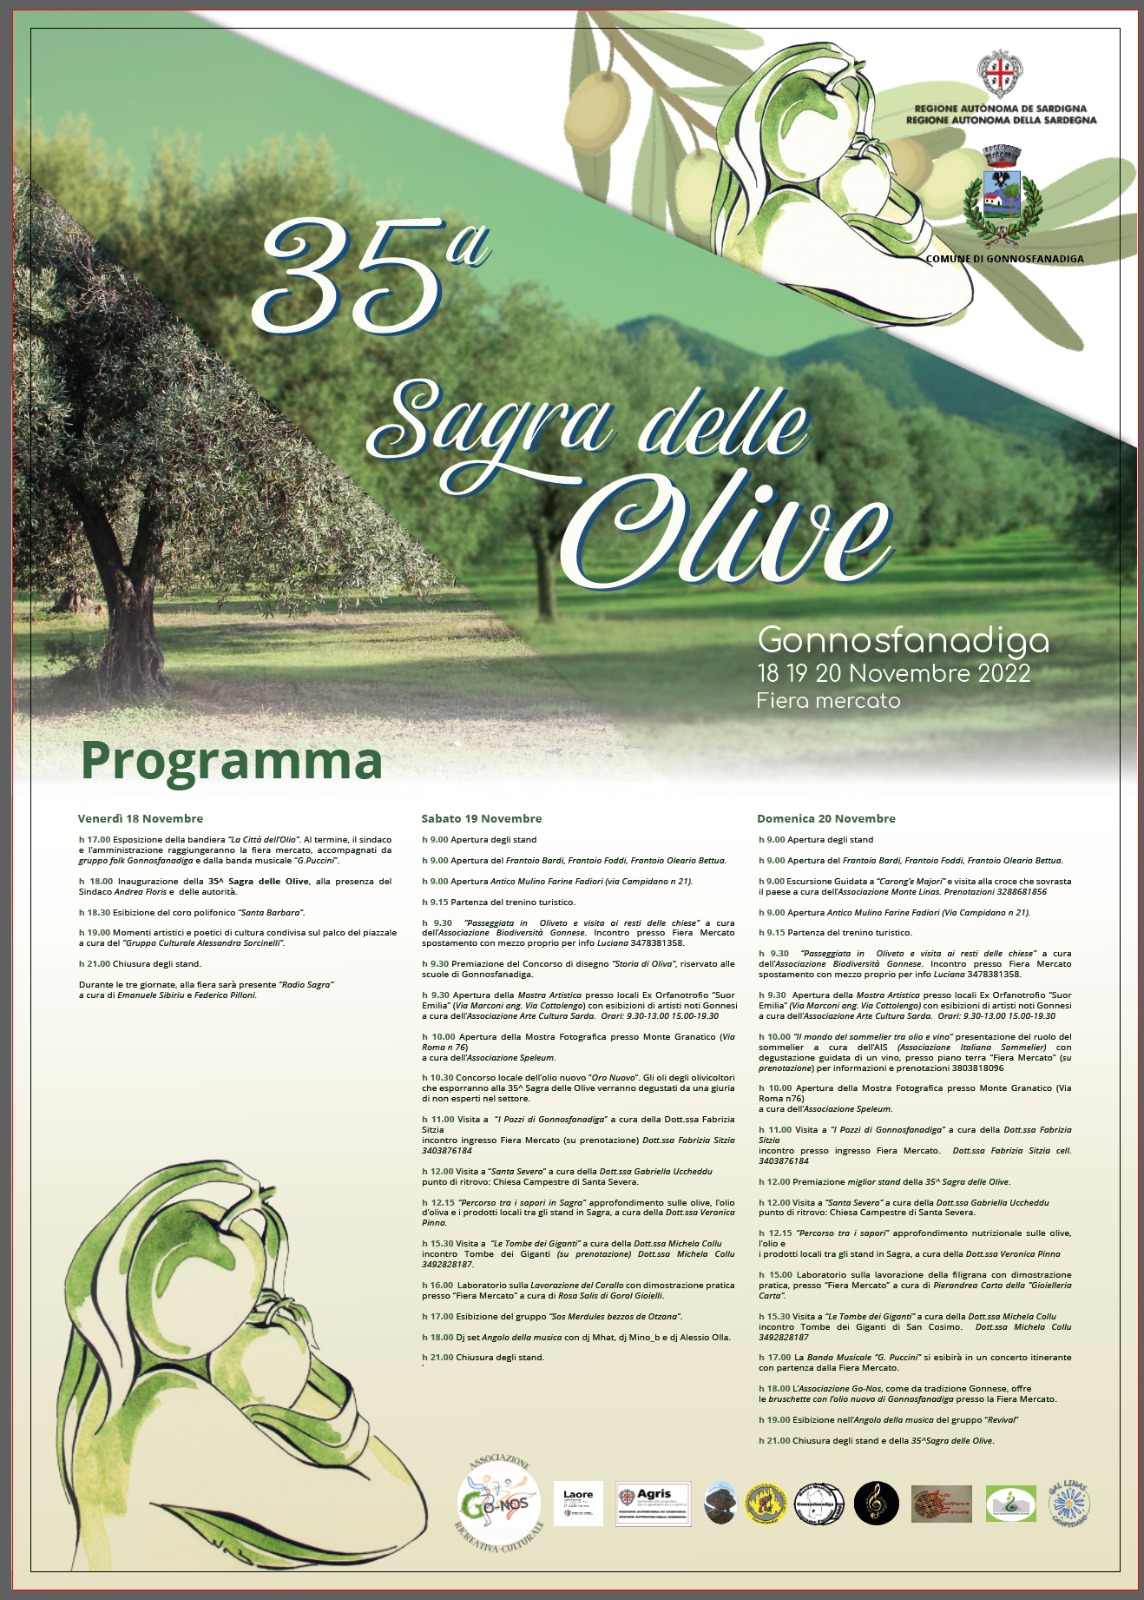 Gonnosfanadiga (SU)
"35^ Sagra delle Olive"
18-19-20 Novembre 2022